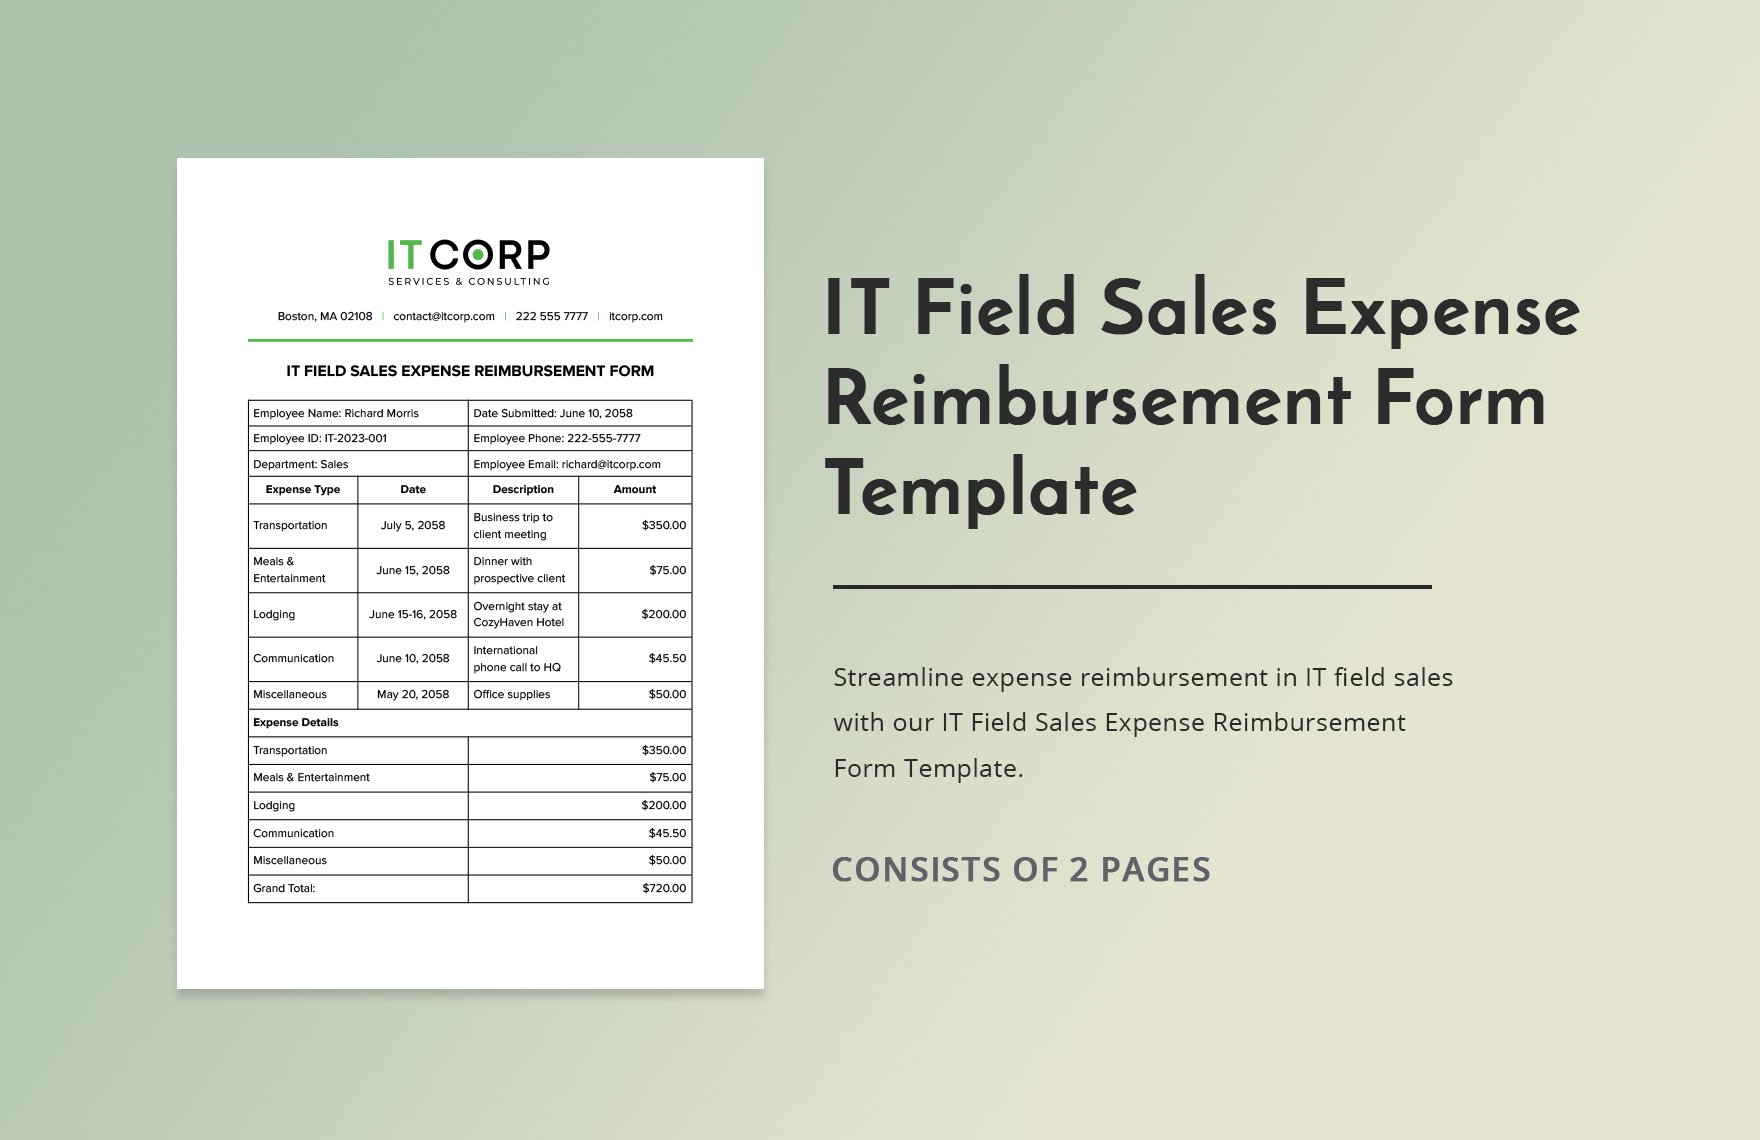 IT Field Sales Expense Reimbursement Form Template